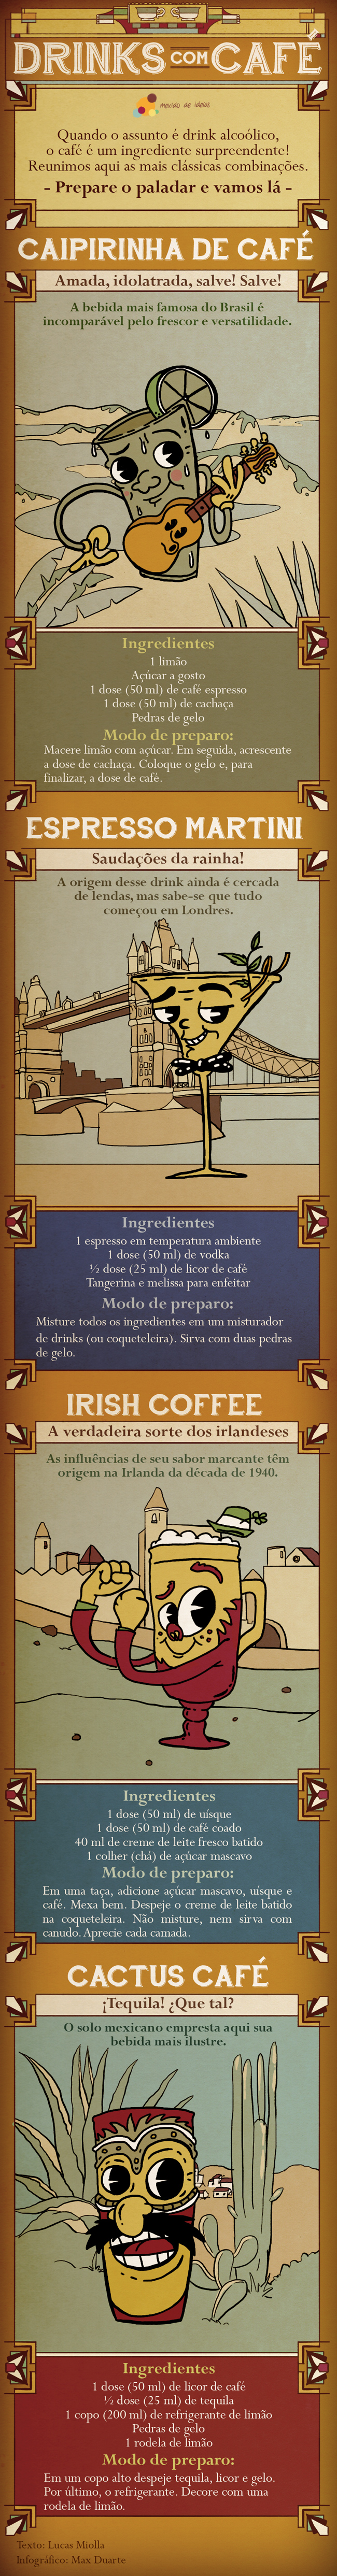 infografico-drinks-cafe